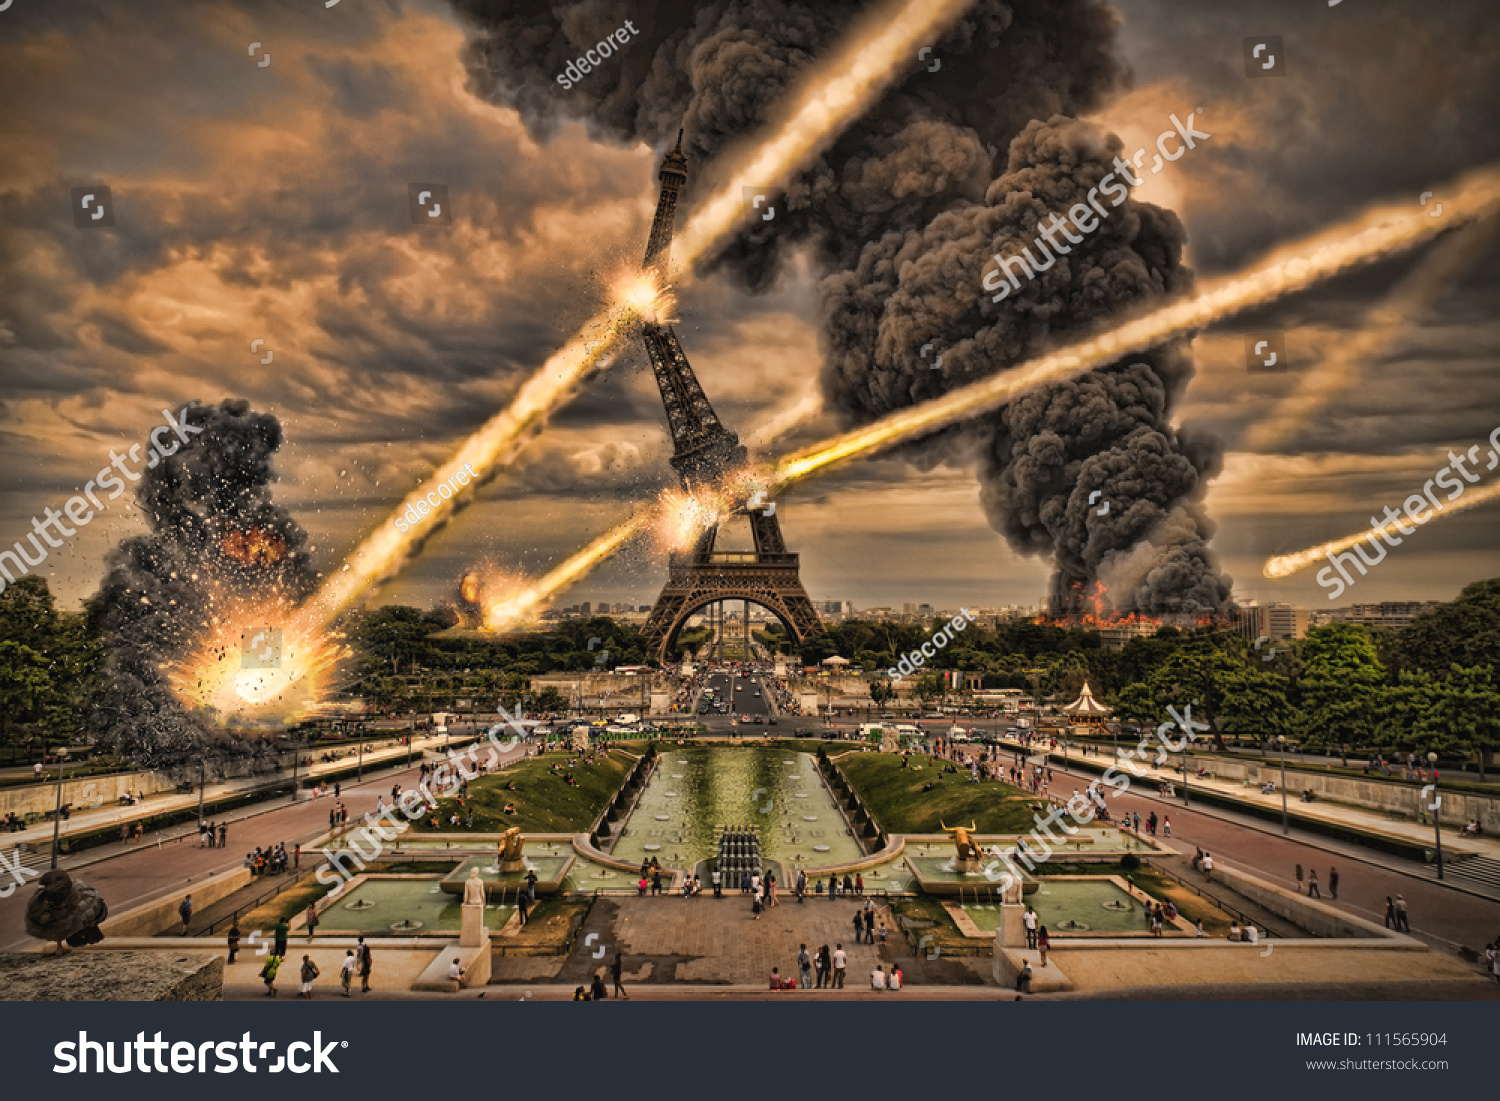 Meteorite shower over paris, destroying the Eiffel Tower #111565904